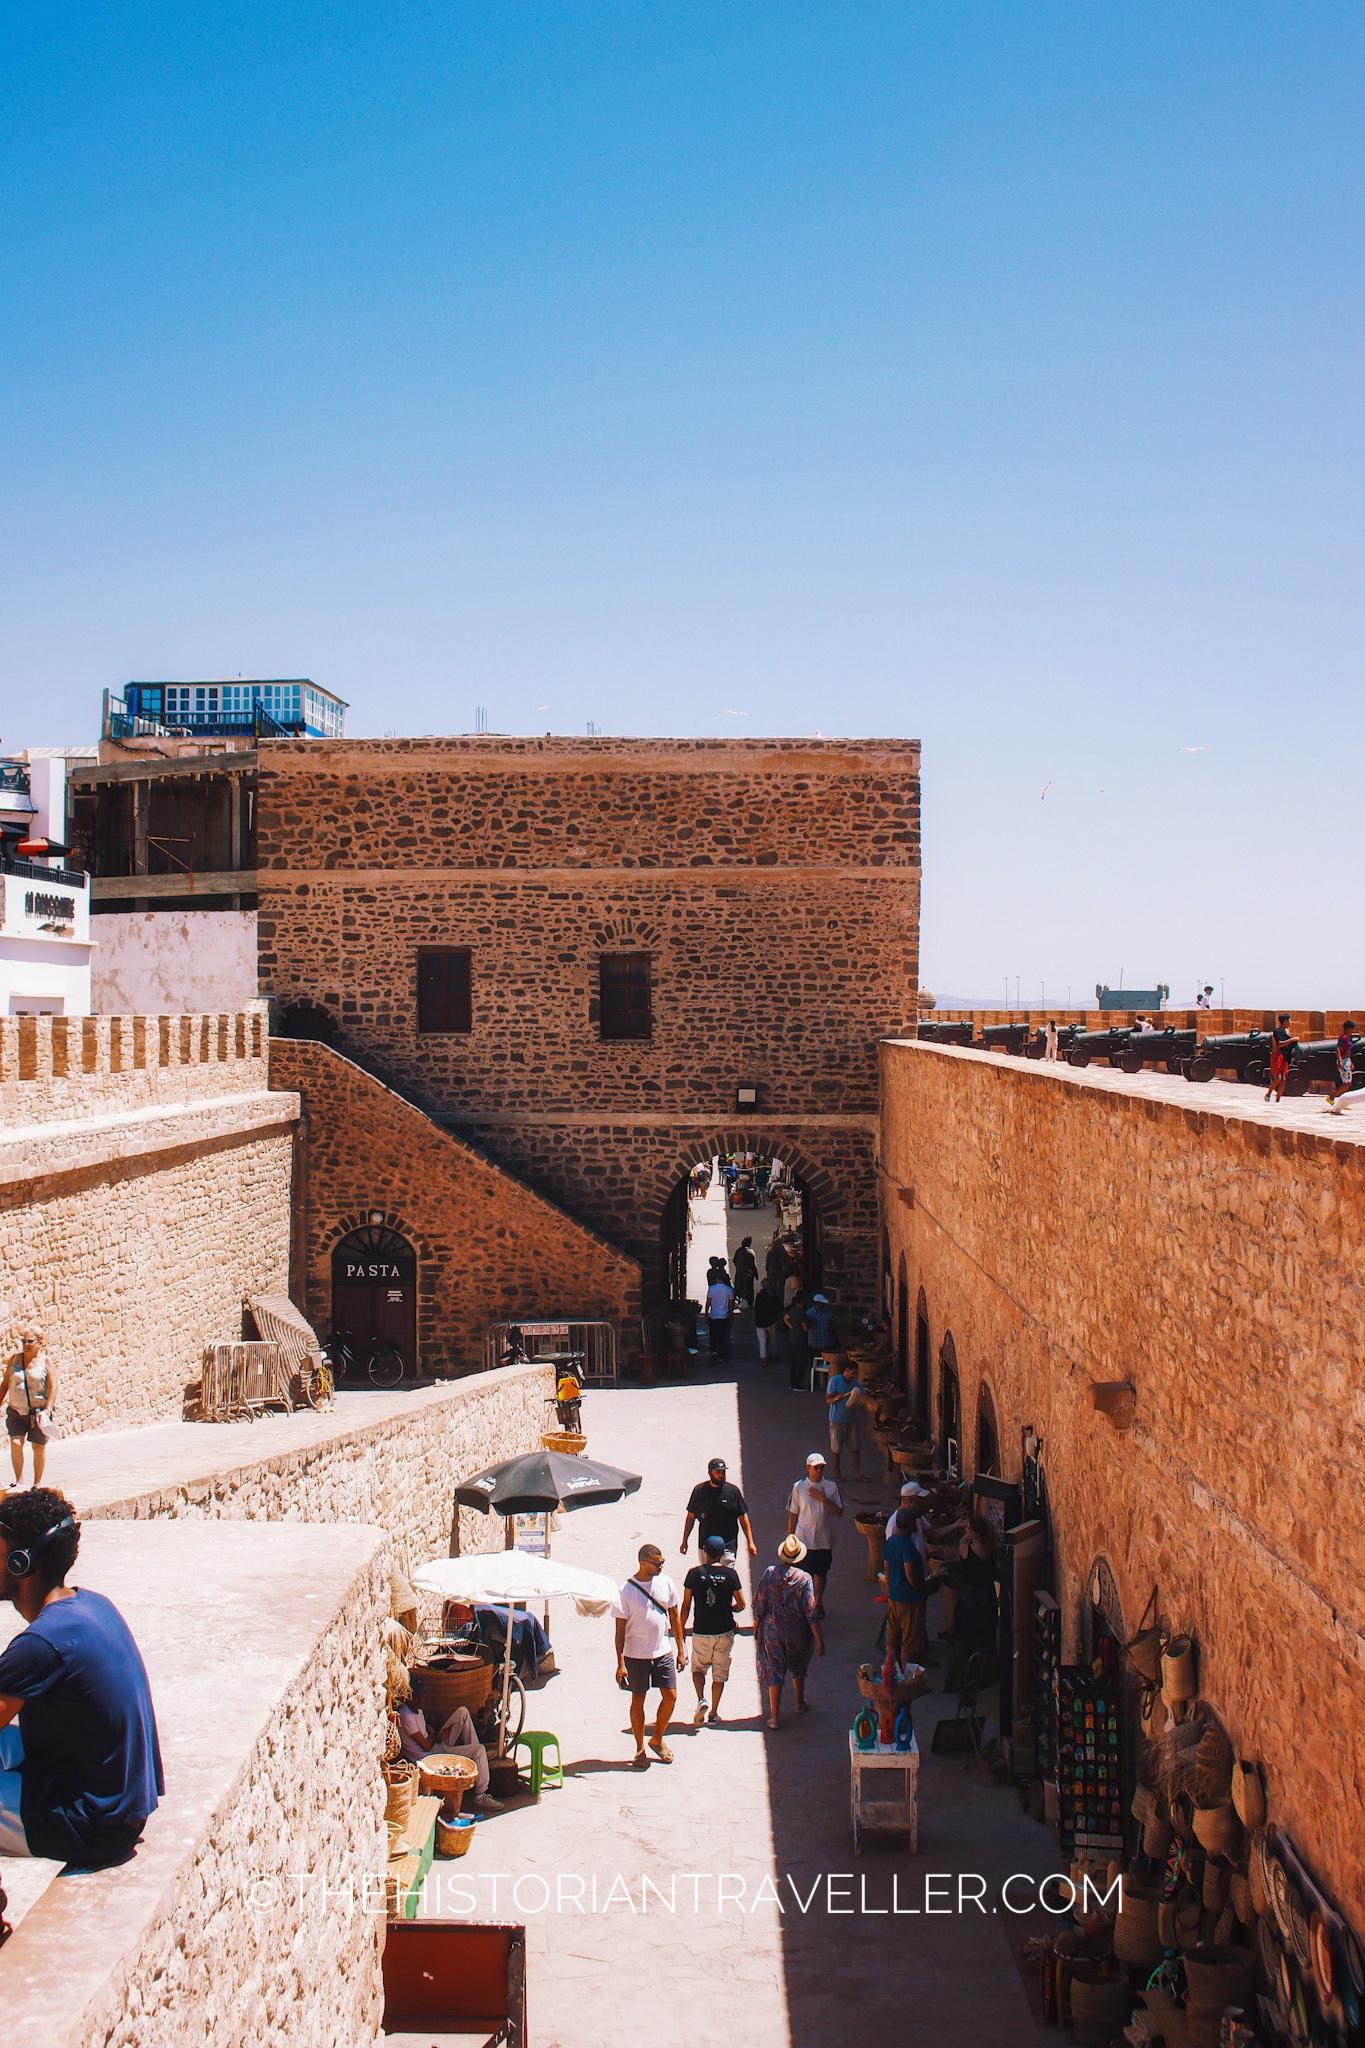 Day trip to Essaouira - Essaouira ramparts